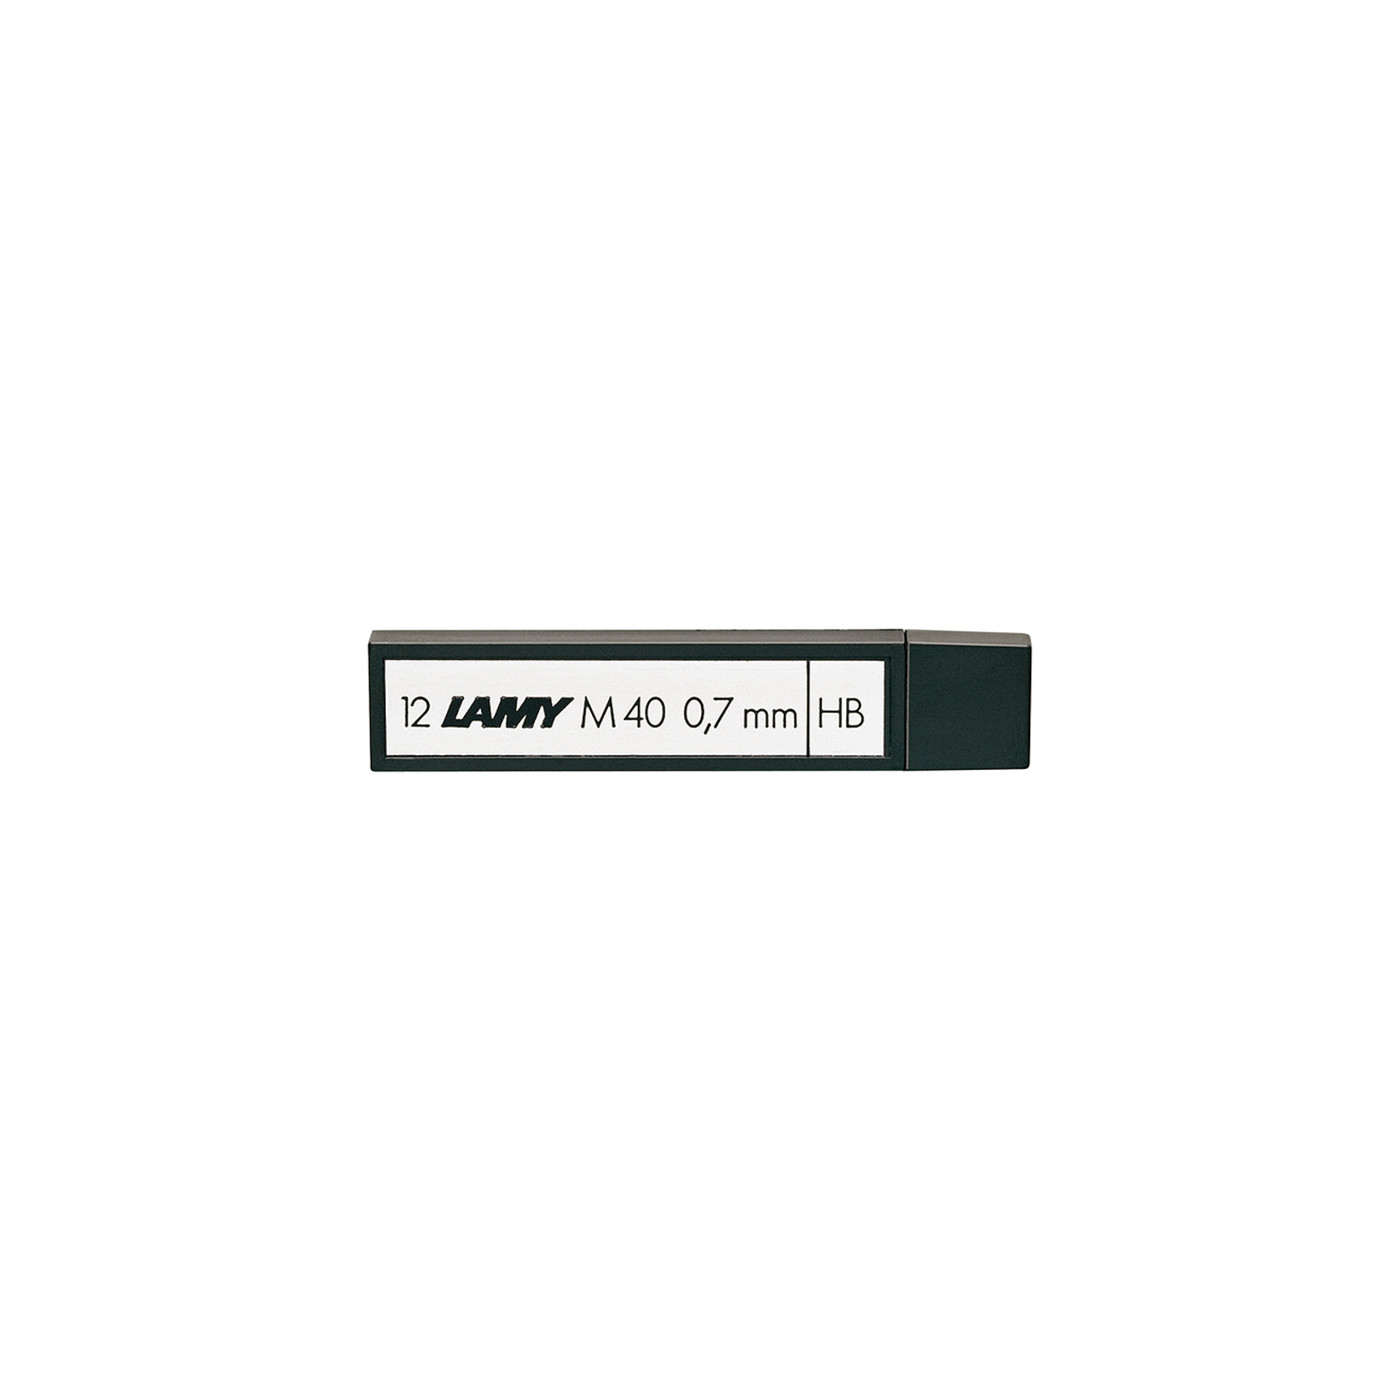 Lamy pencil leads - M40 0.7mm